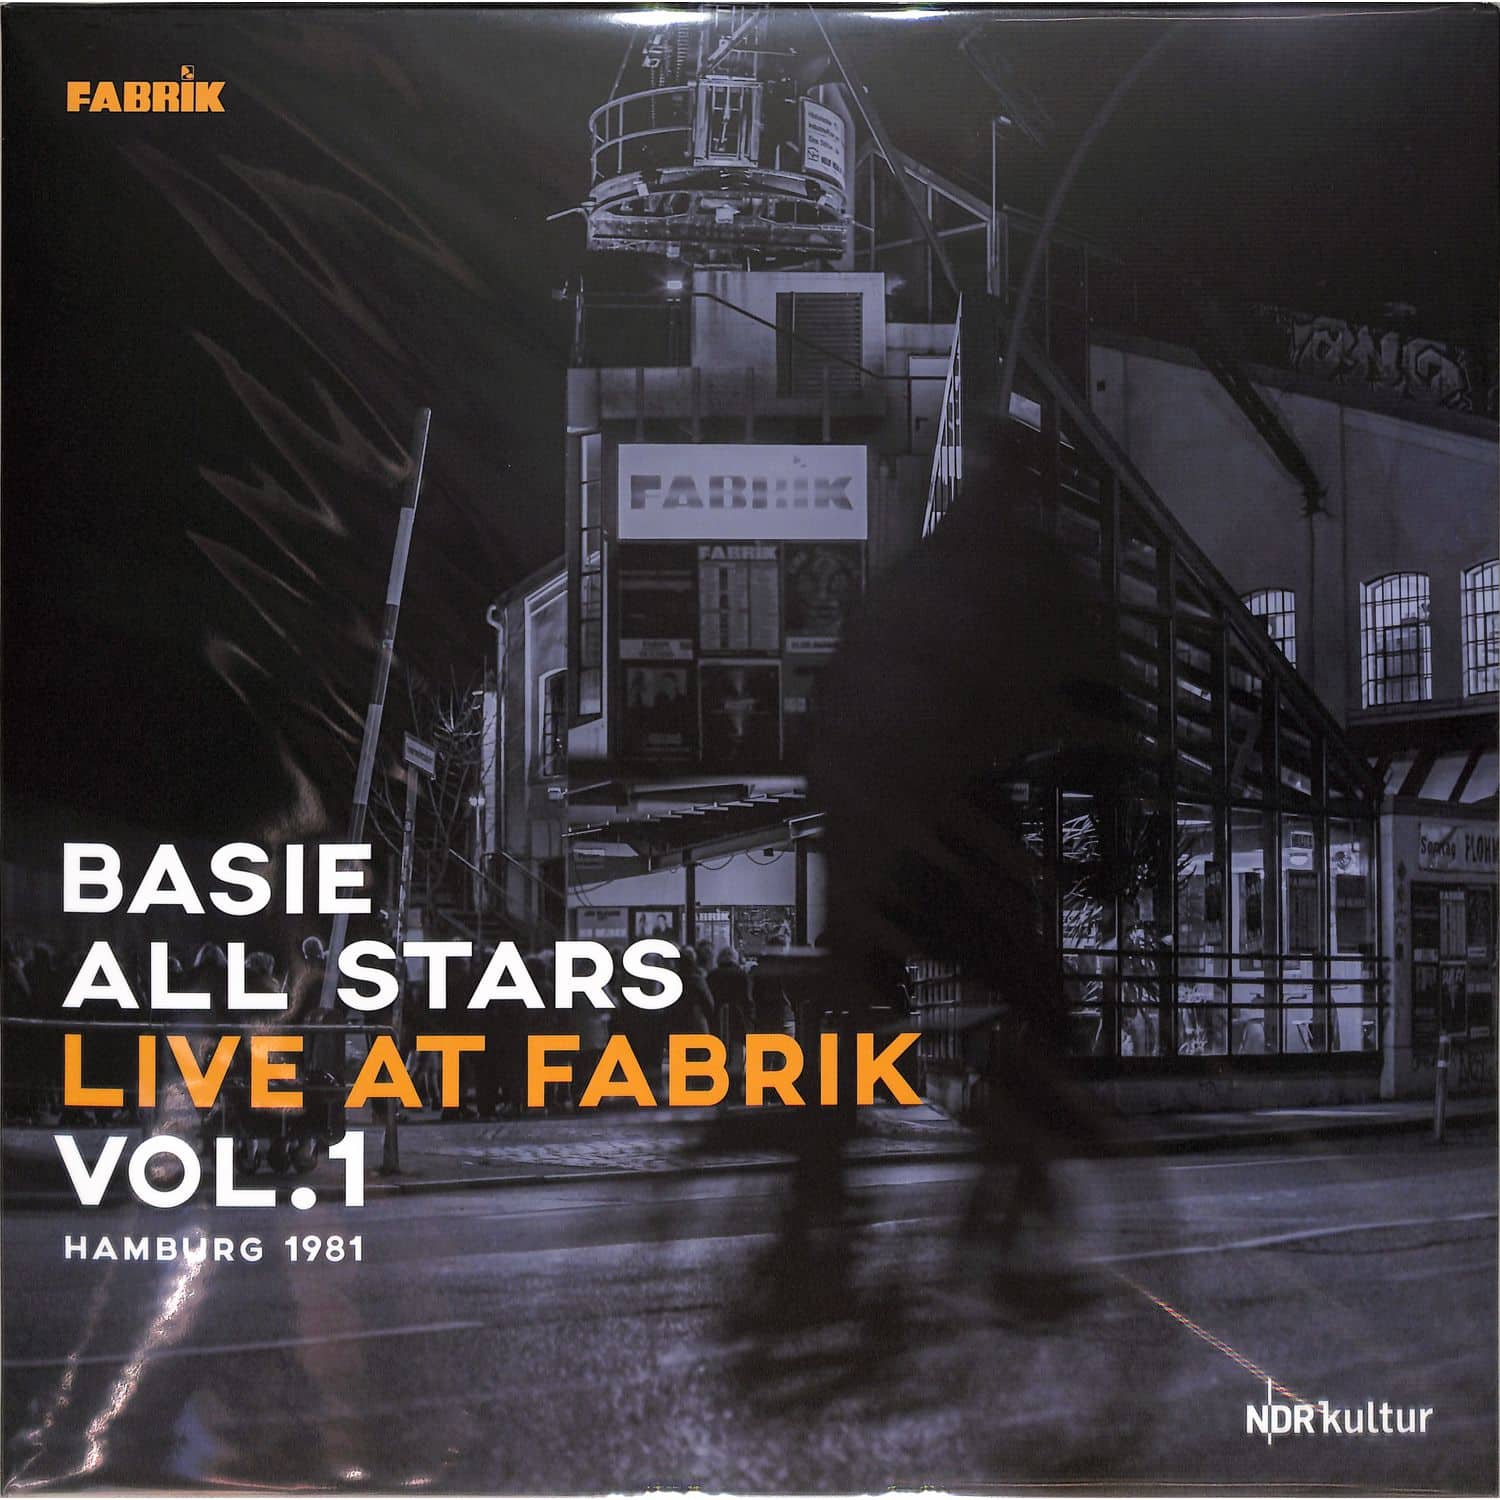 Basie All Stars - LIVE AT FABRIK HAMBURG 1981 